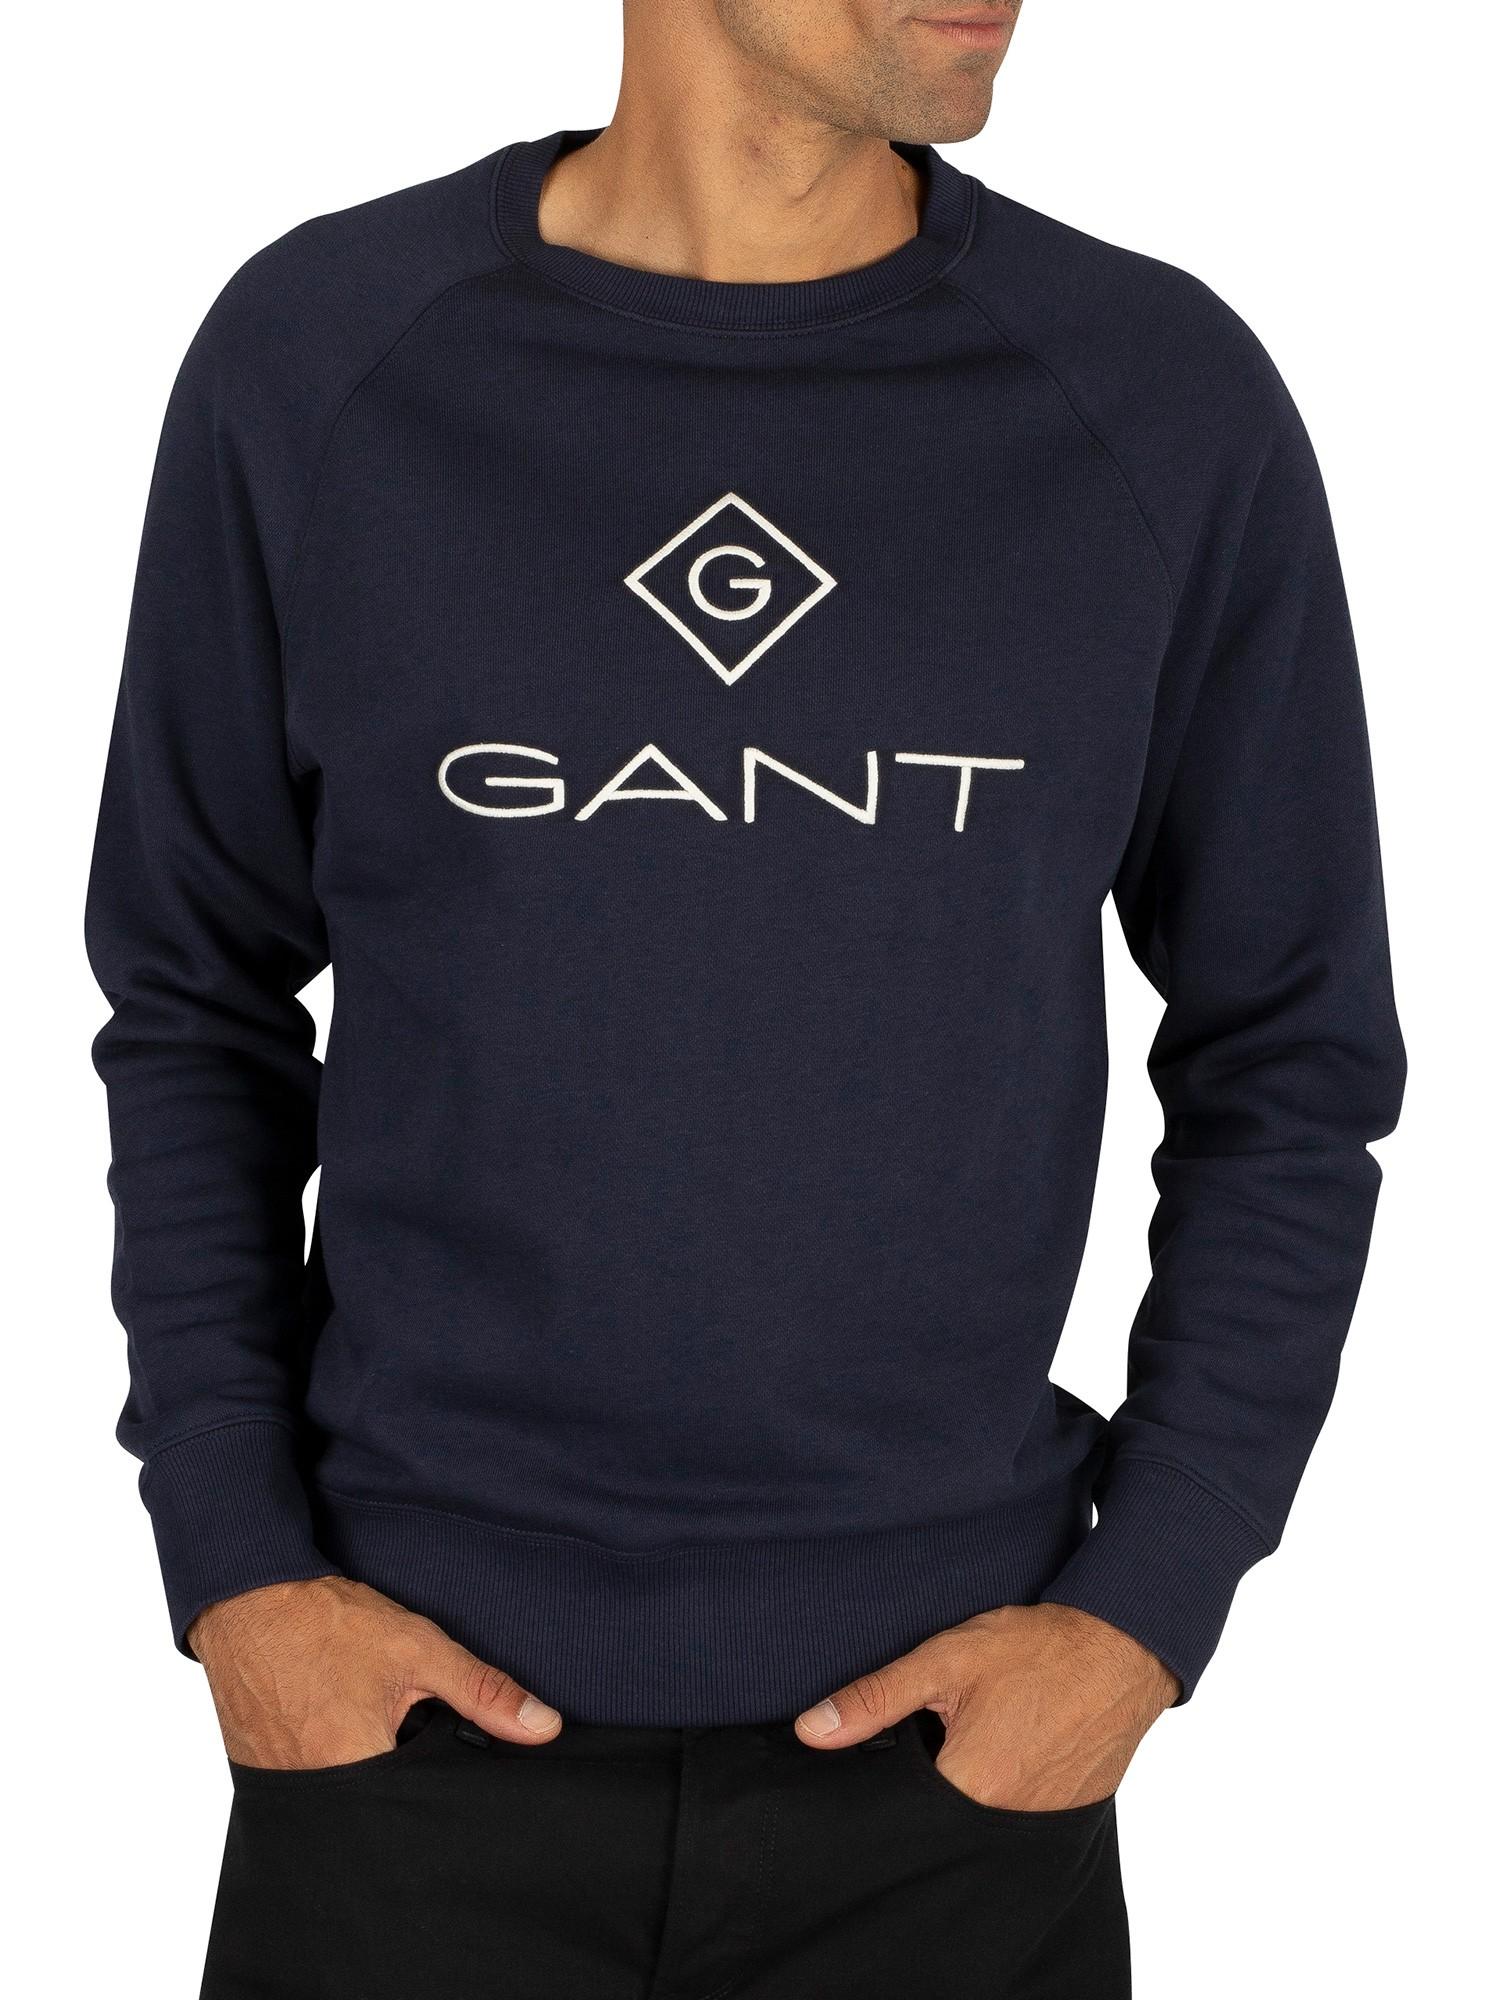 GANT Lock Up Sweatshirt in Blue for Men - Lyst